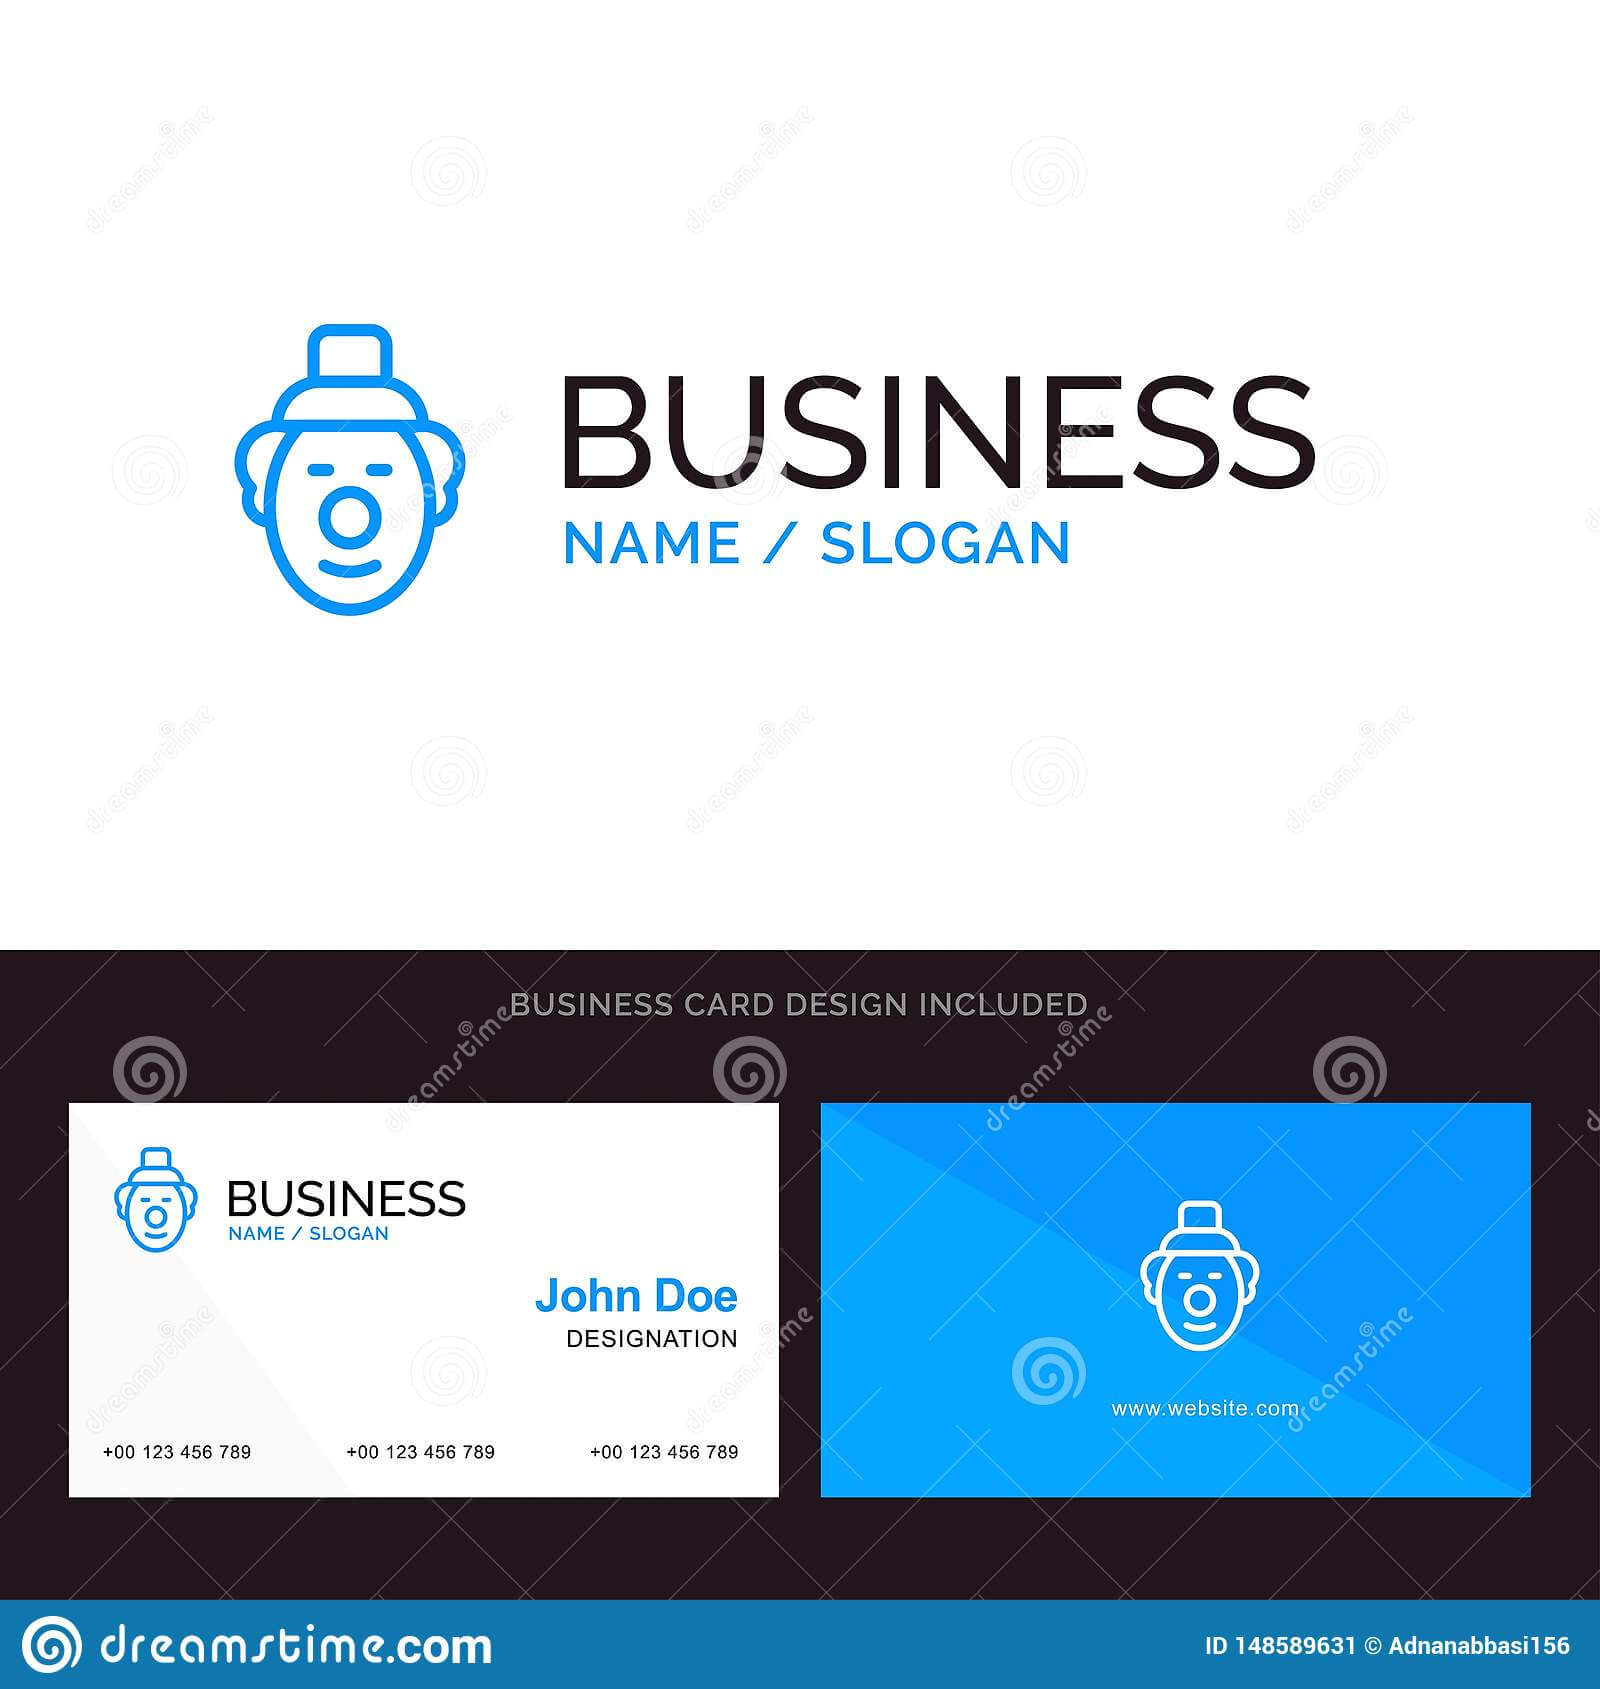 Logo And Business Card Template For Joker, Clown, Circus Within Joker Card Template